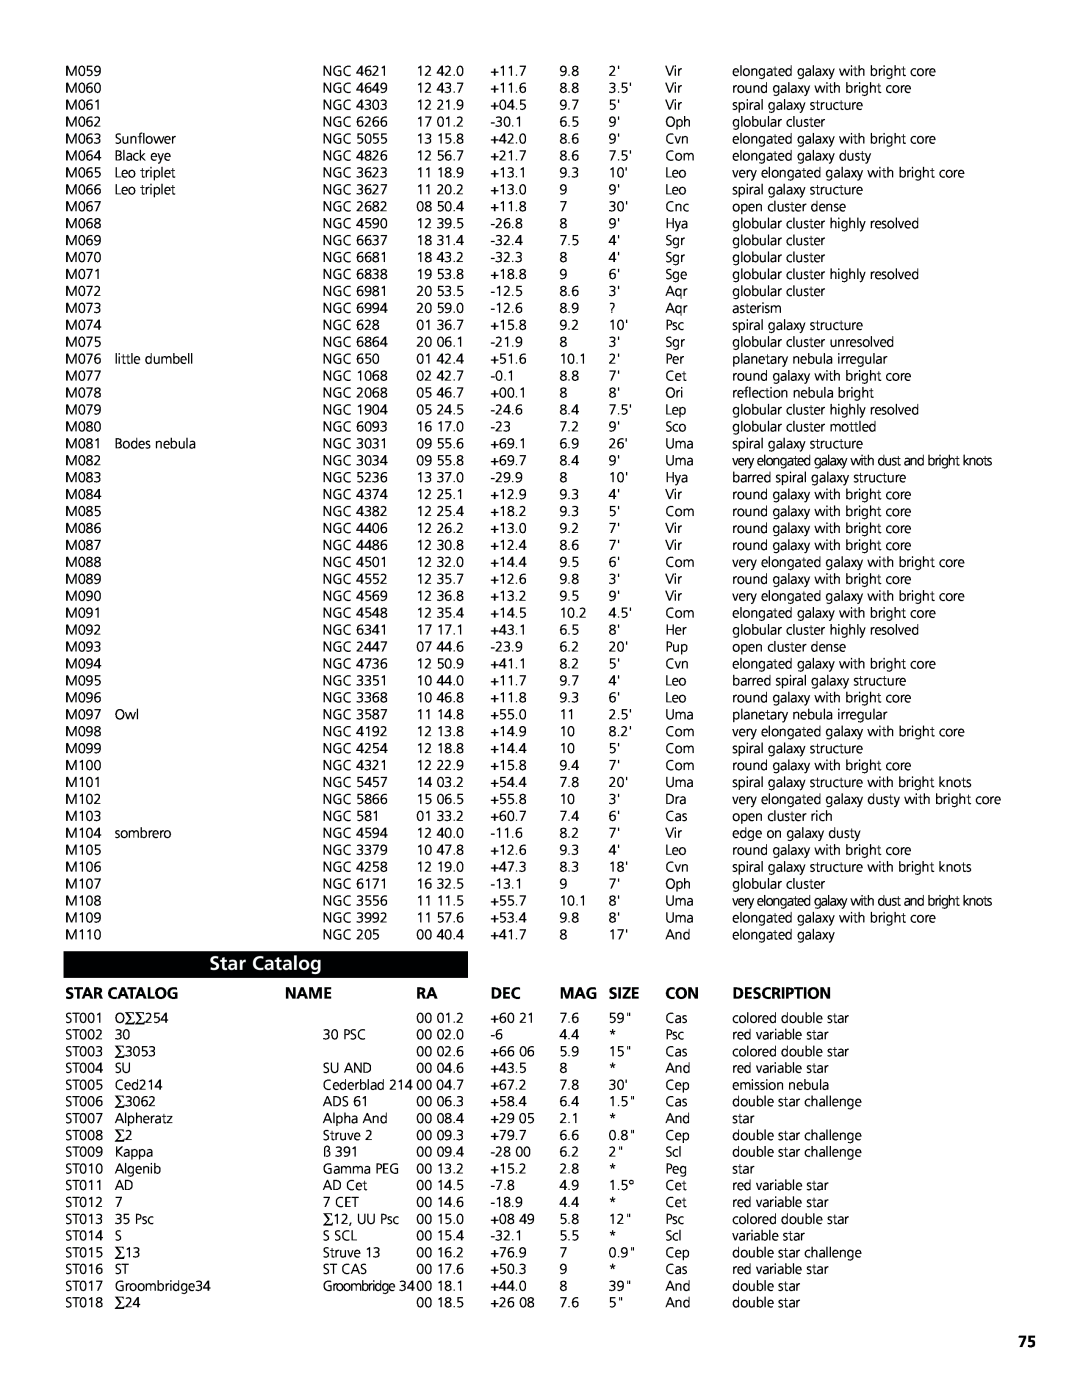 Bushnell 78-8831, 78-8846 instruction manual Star Catalog, Name, Size, Description 